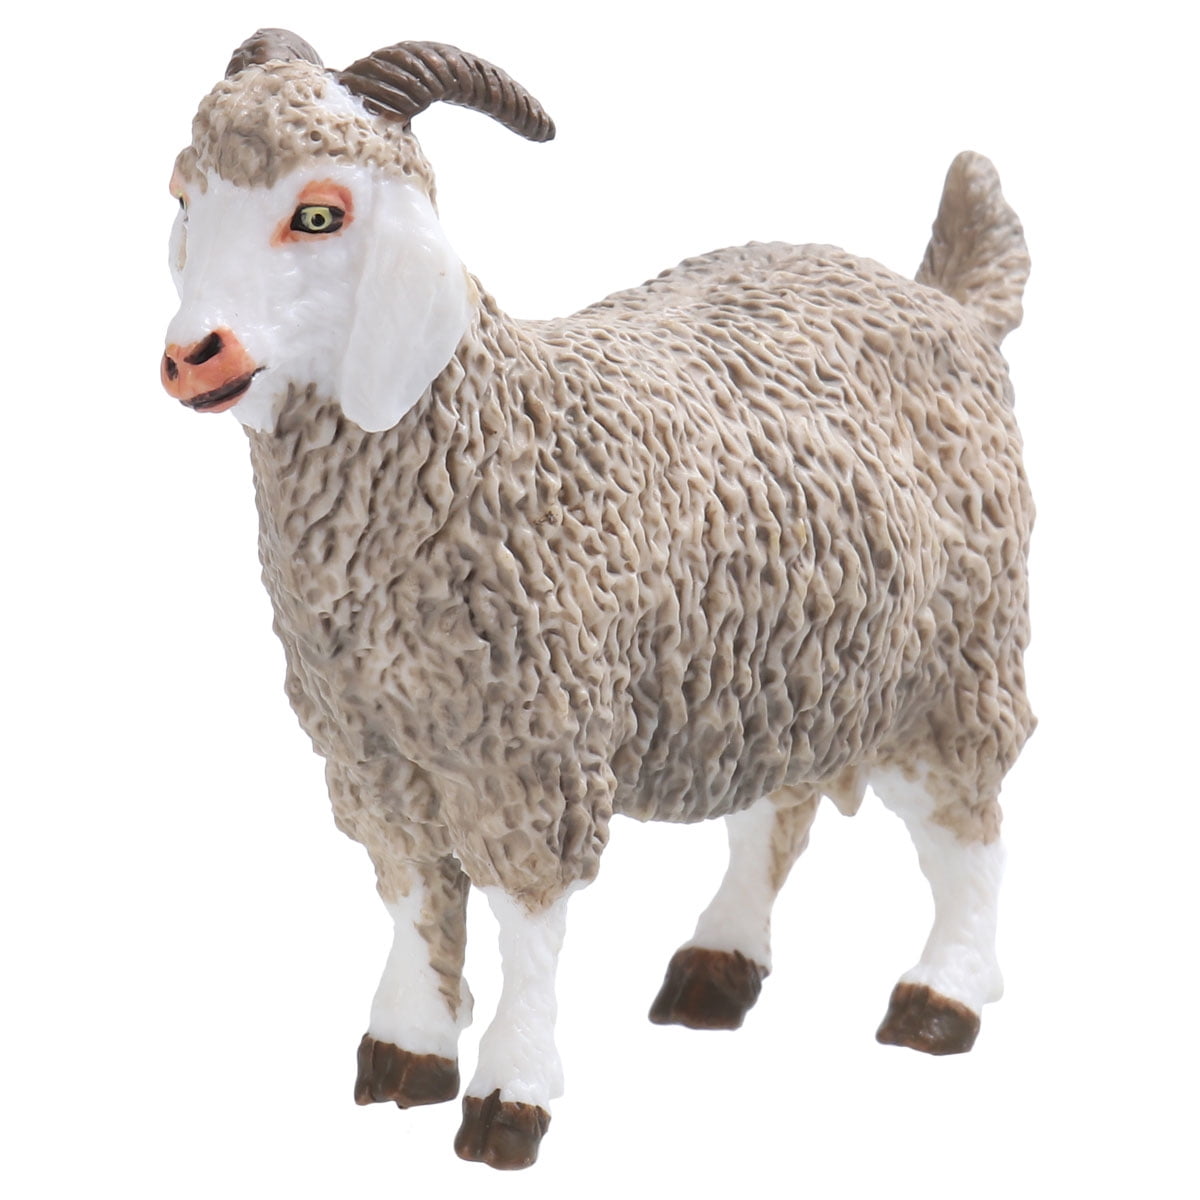 Simulation Bighorn Sheep Toy Farm Animal Model for Kids Home Desk Decor 